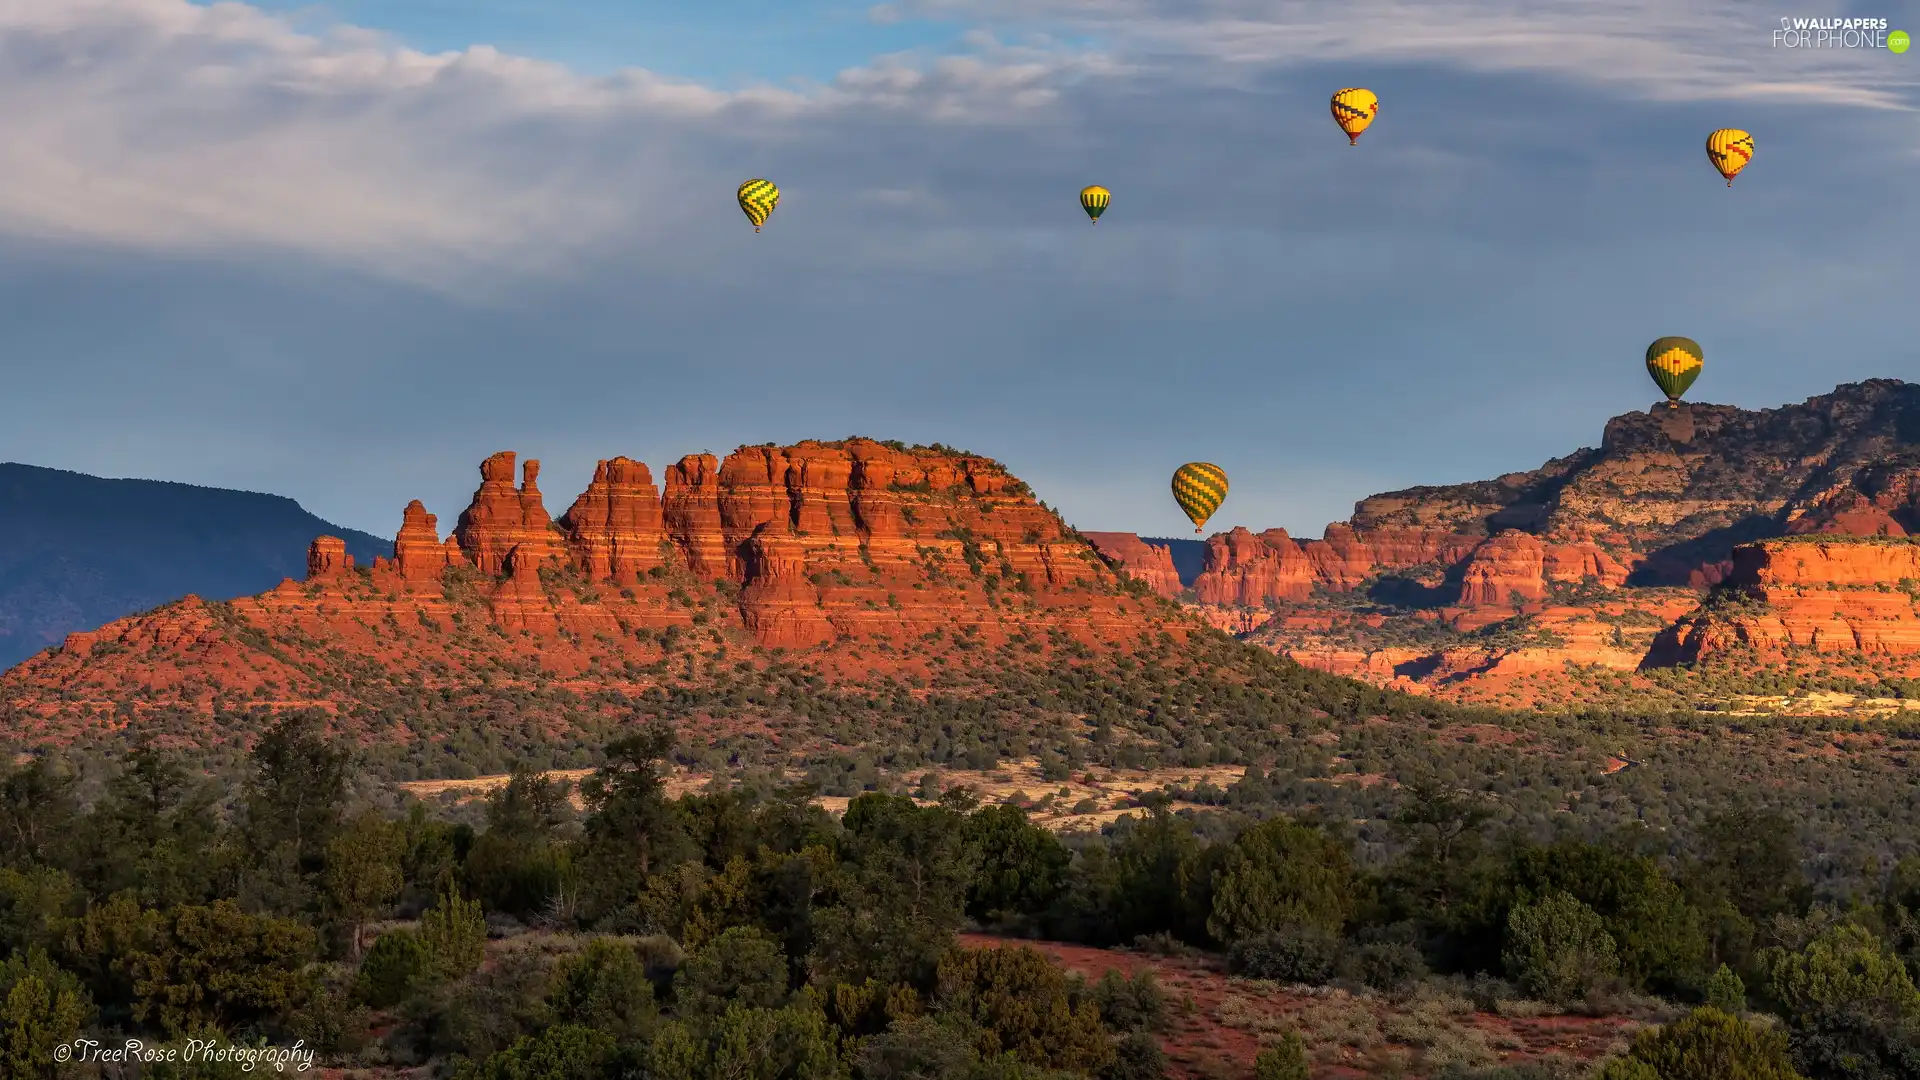 trees, viewes, The United States, Balloons, Arizona, Mountains, rocks, Sedona